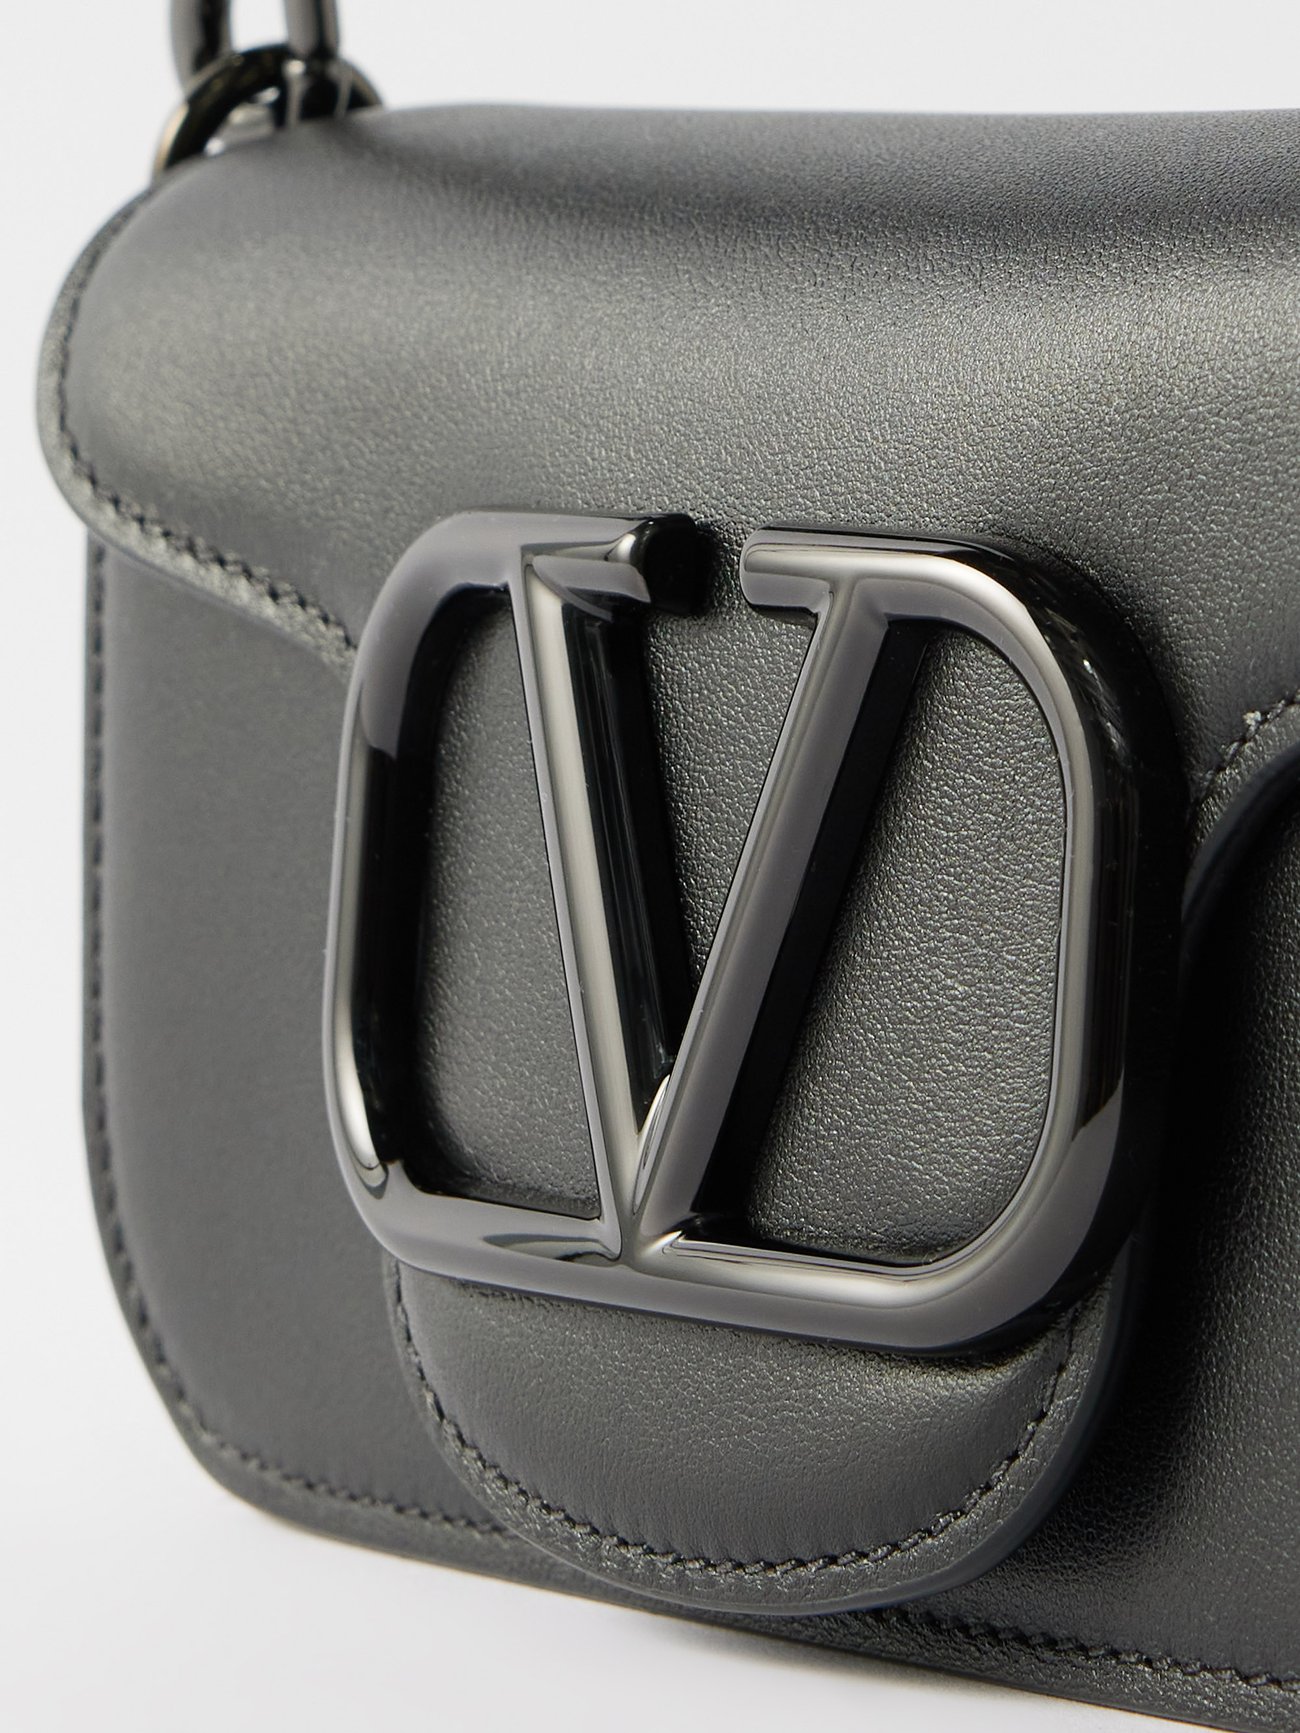 VALENTINO Logo Small VSling Shoulder Bag Crossbody Silver Metallic